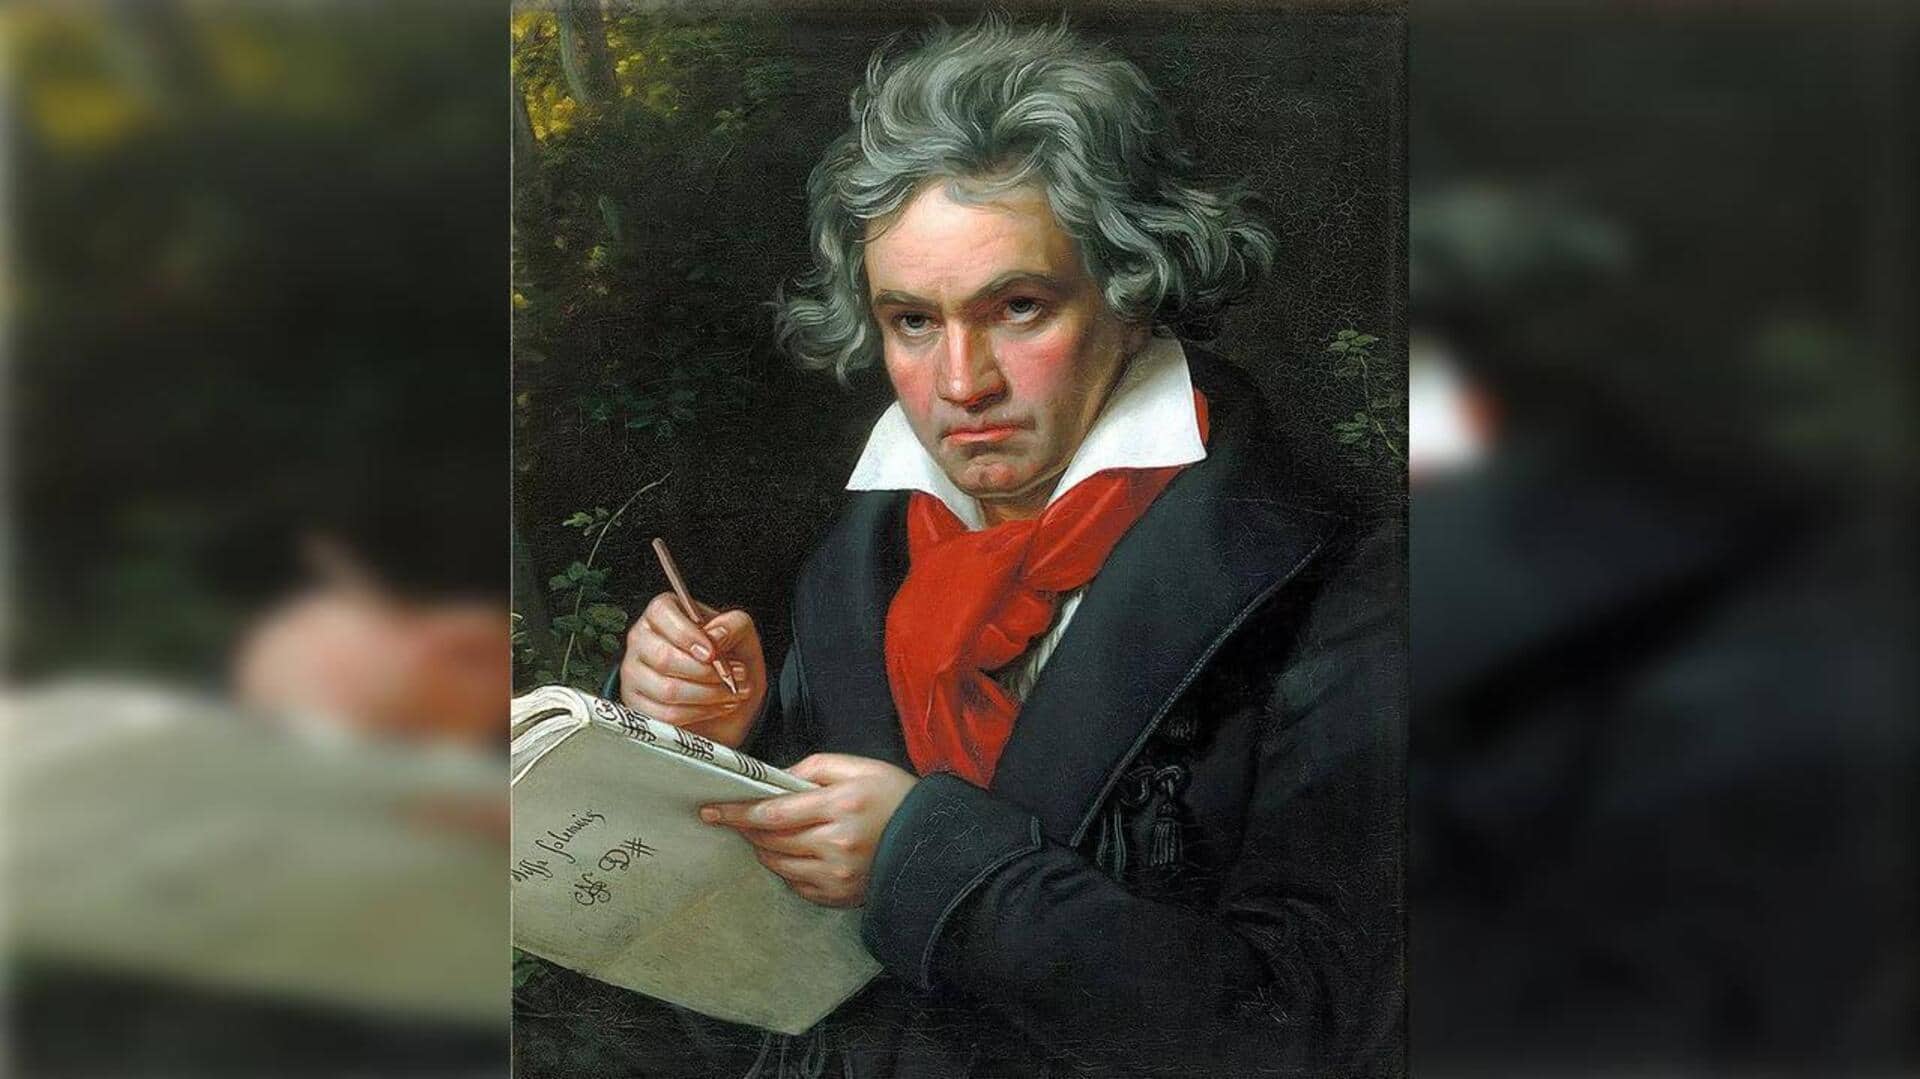 Lead made Beethoven sick, but it didn't kill him: Study